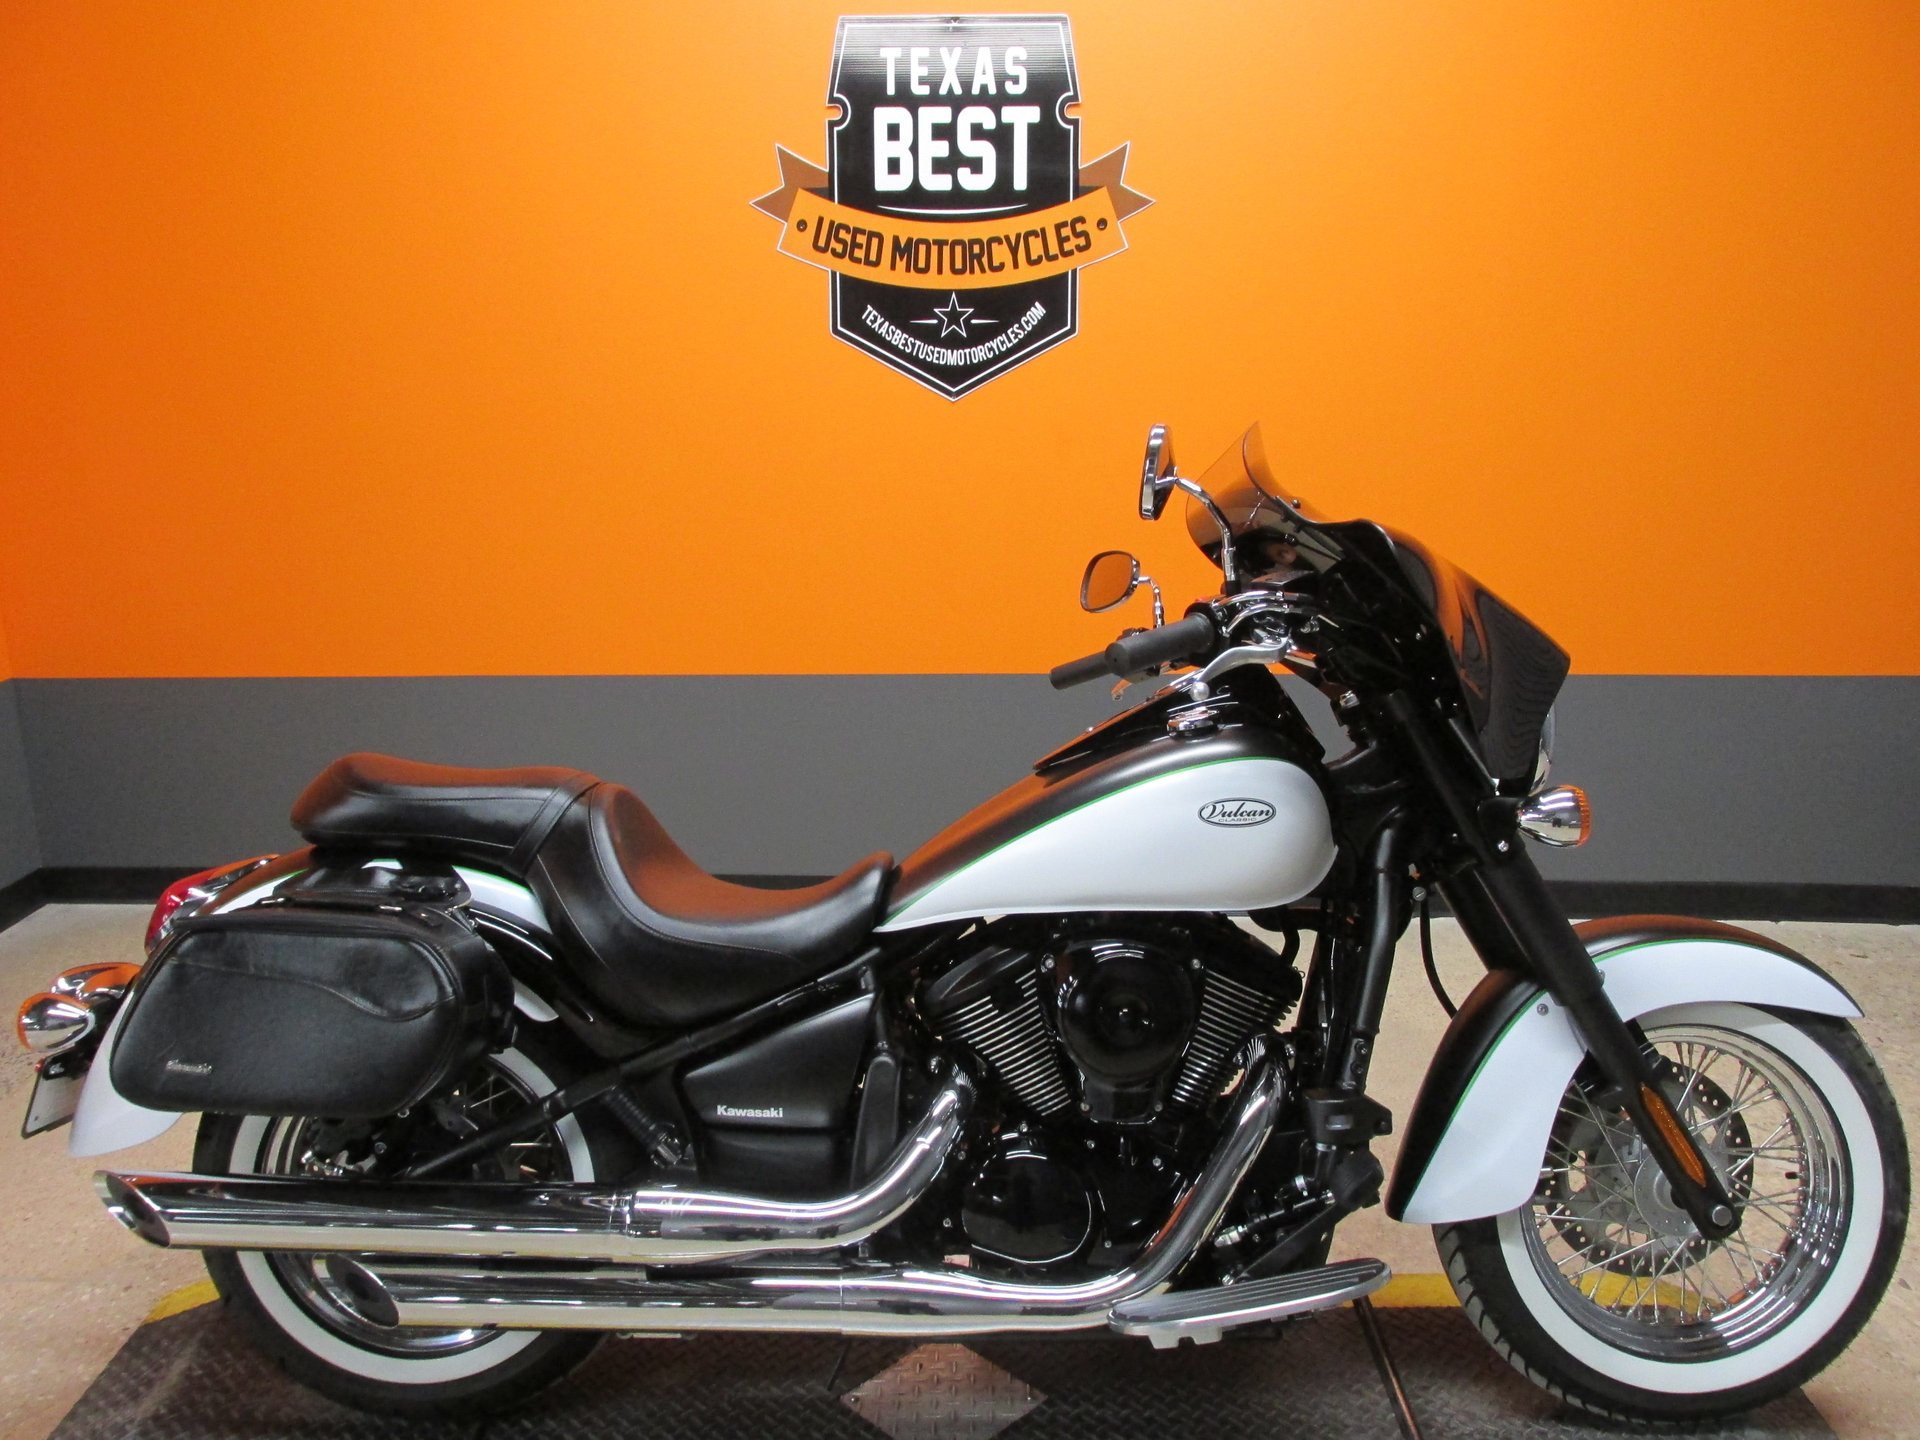 2015 | American Motorcycle Trading Company - Harley Davidson Motorcycles